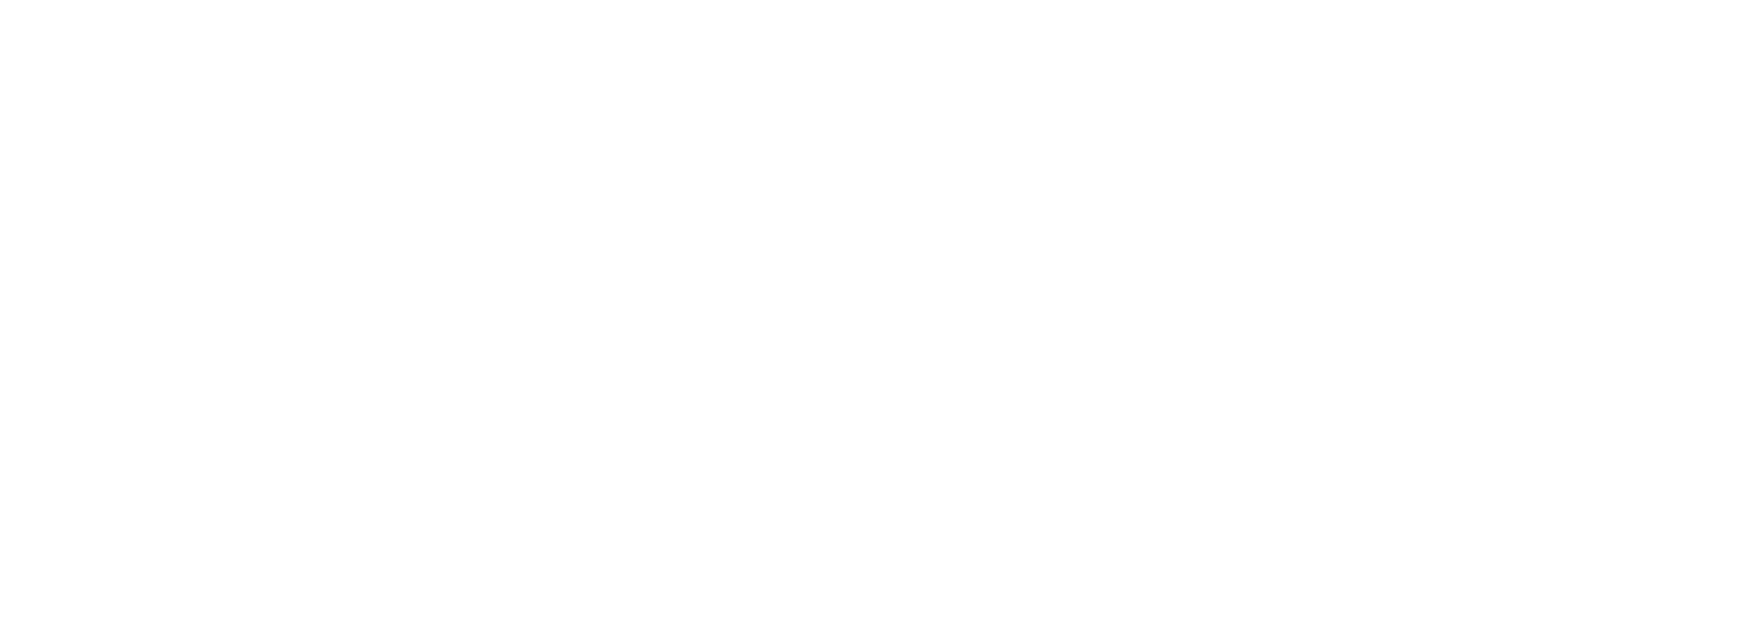 Big Instagram Logo - Instagram Logo Big